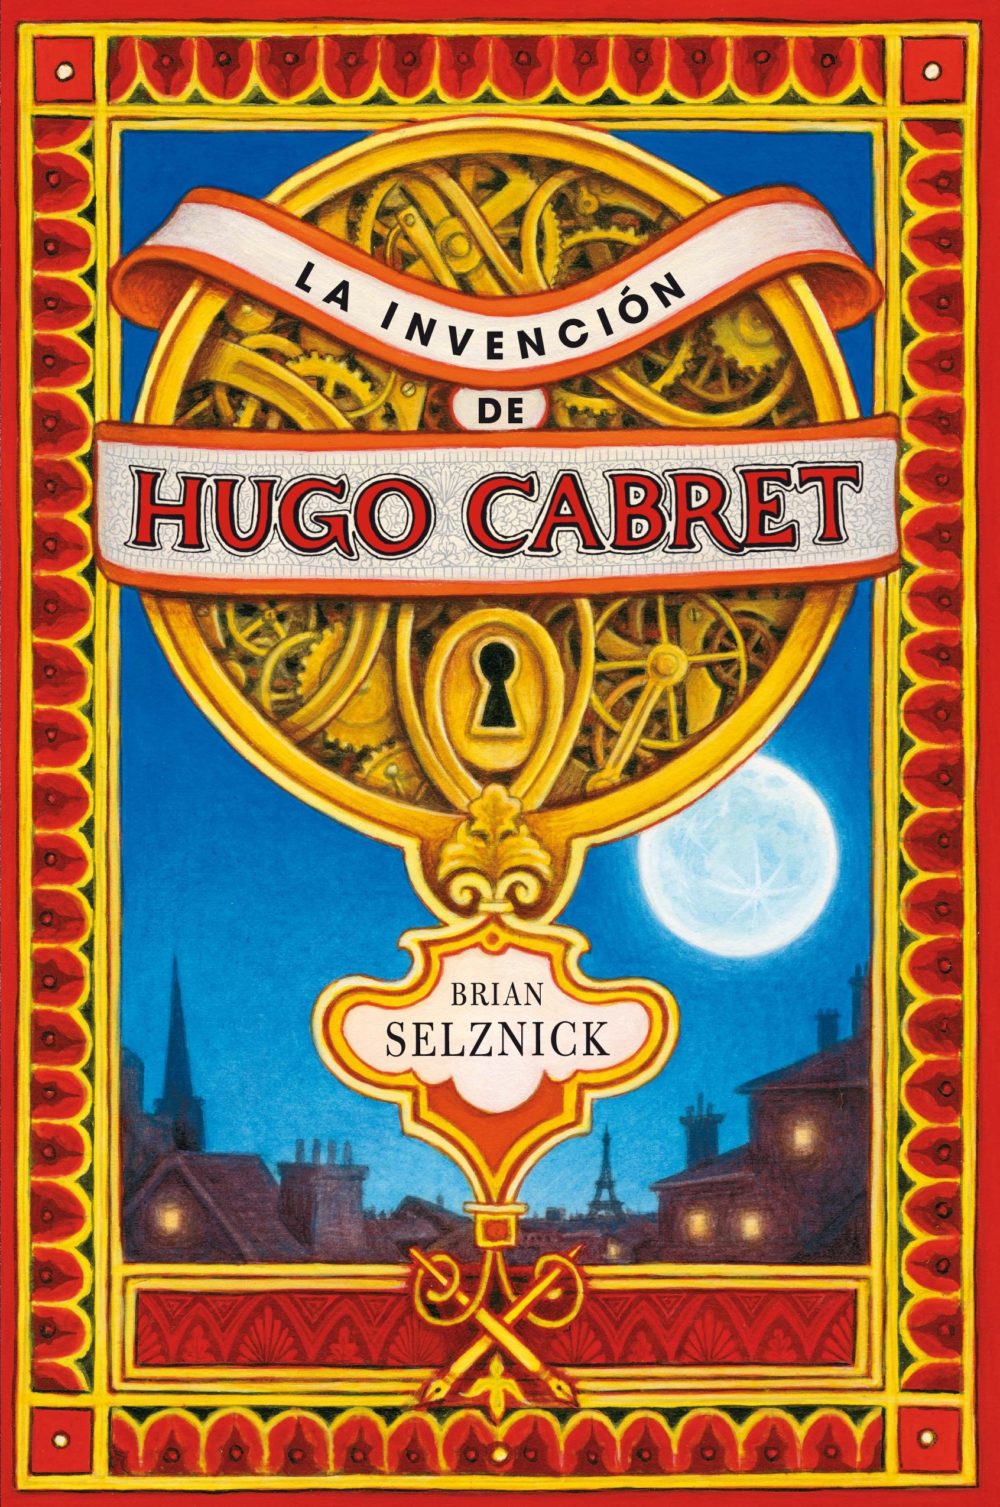 Book: Hugo Cabret by Brian Selznick